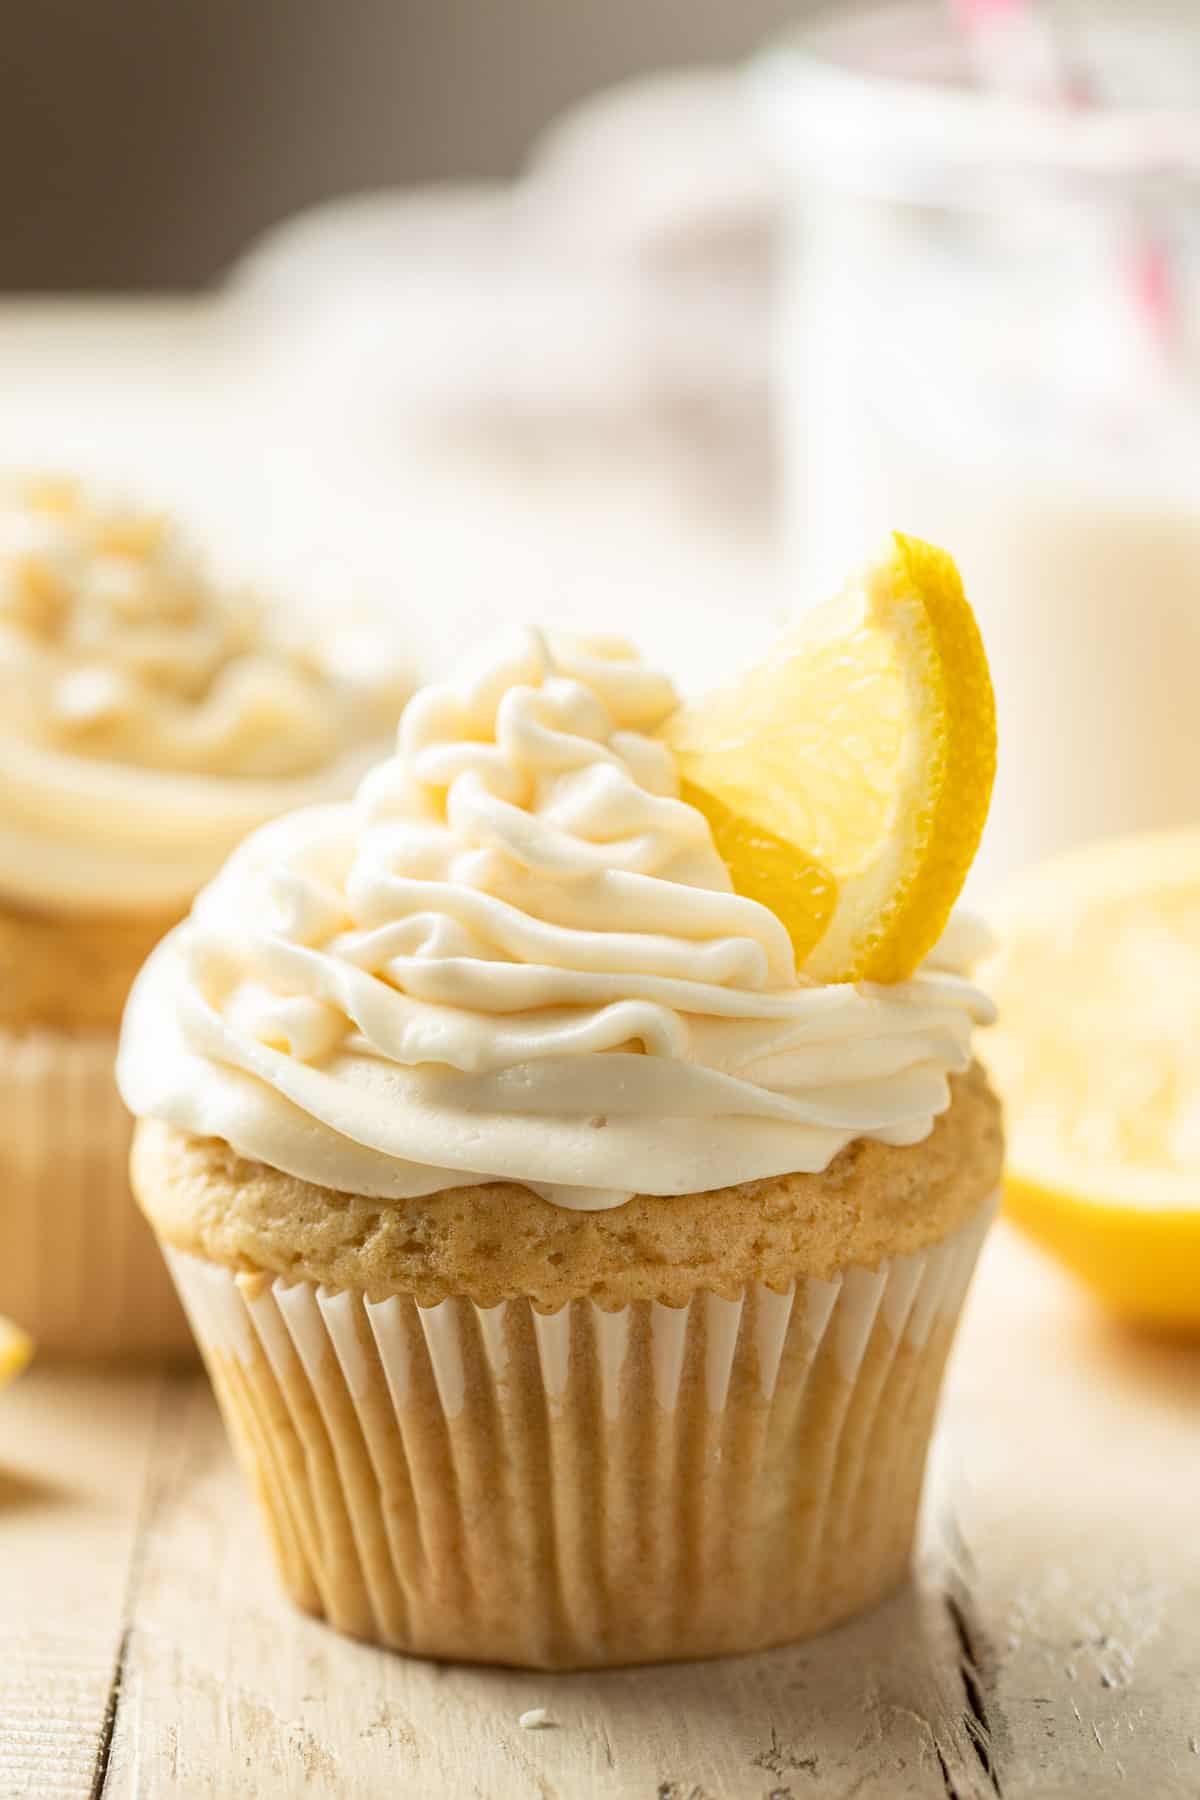 Vegan Lemon Cupcakes with frosting and lemon slice on top.